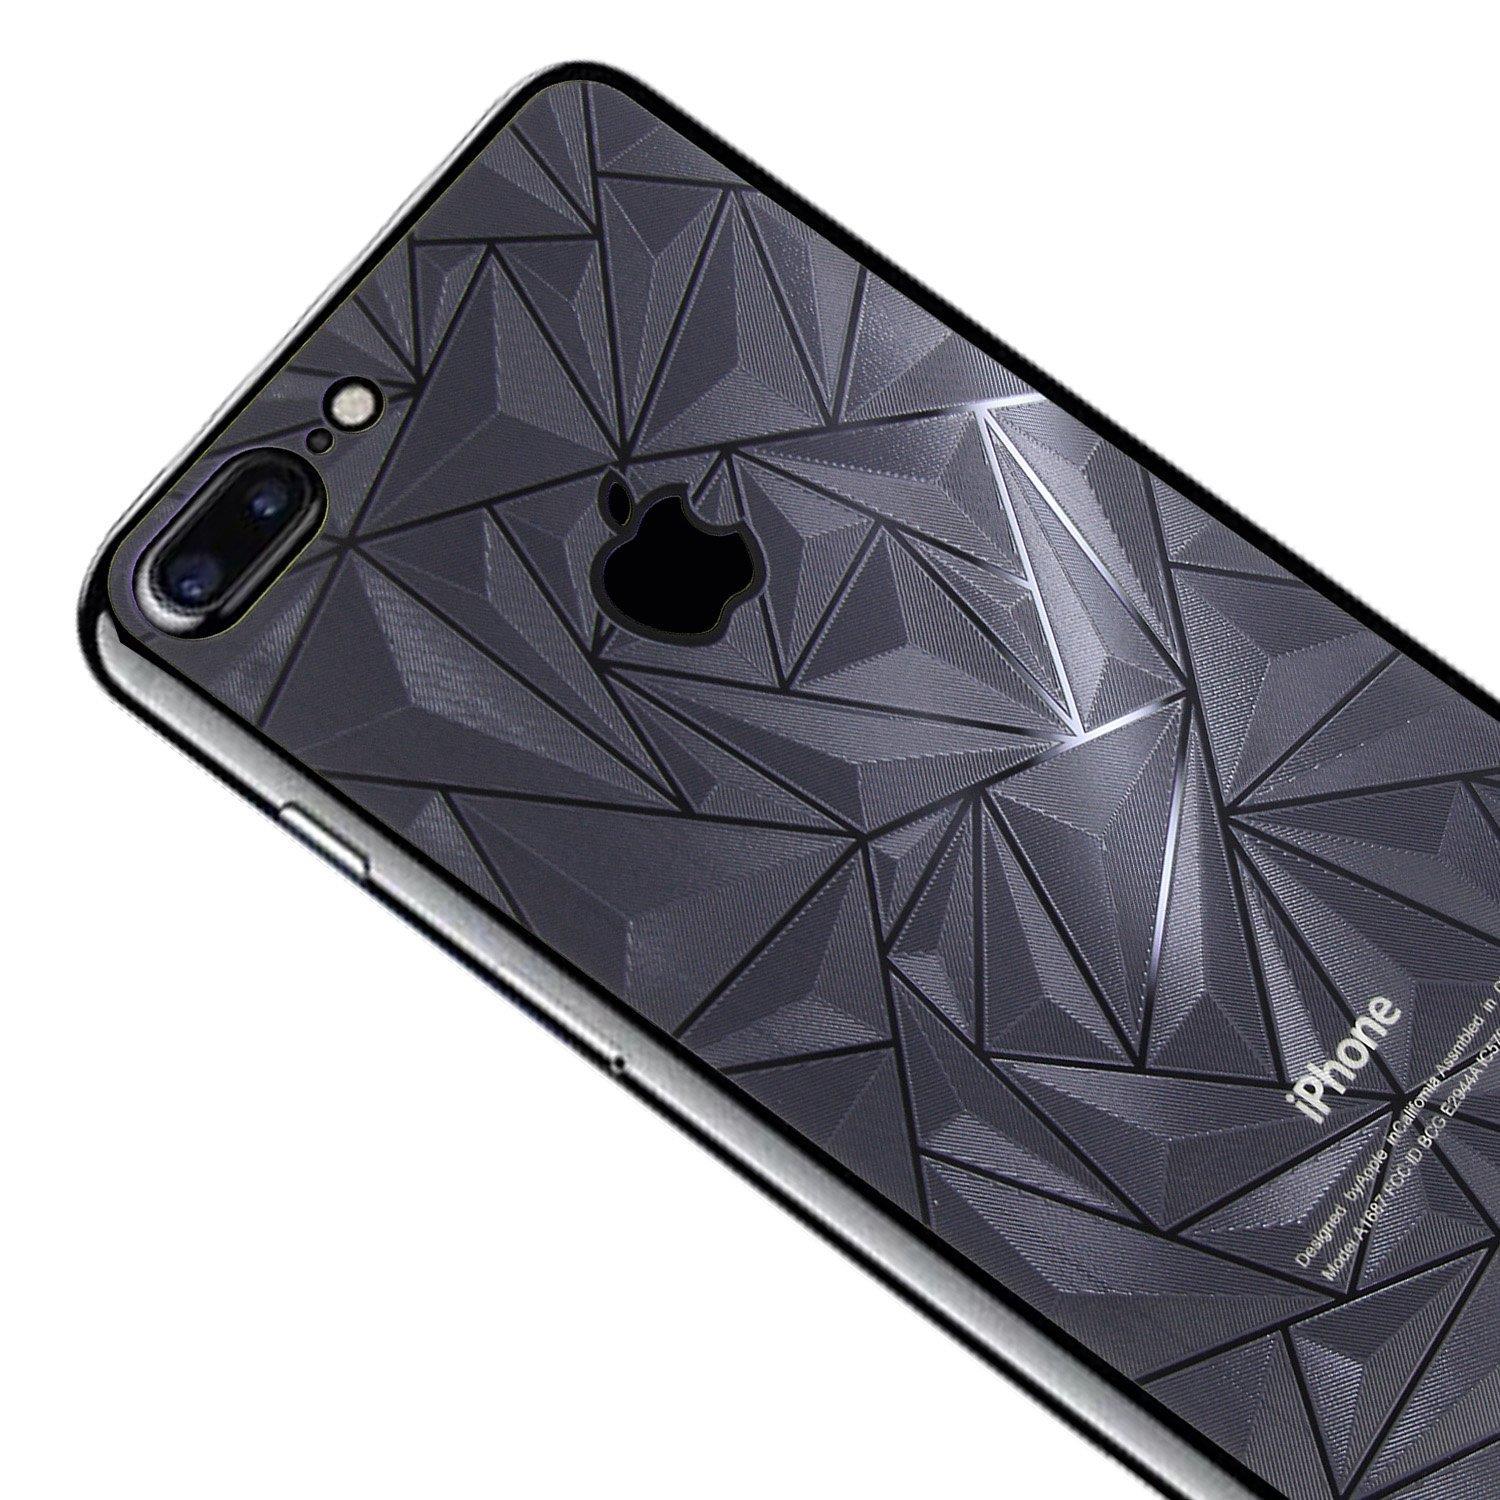 PK Ốp
 iPhone 5 3D kim cương hình 